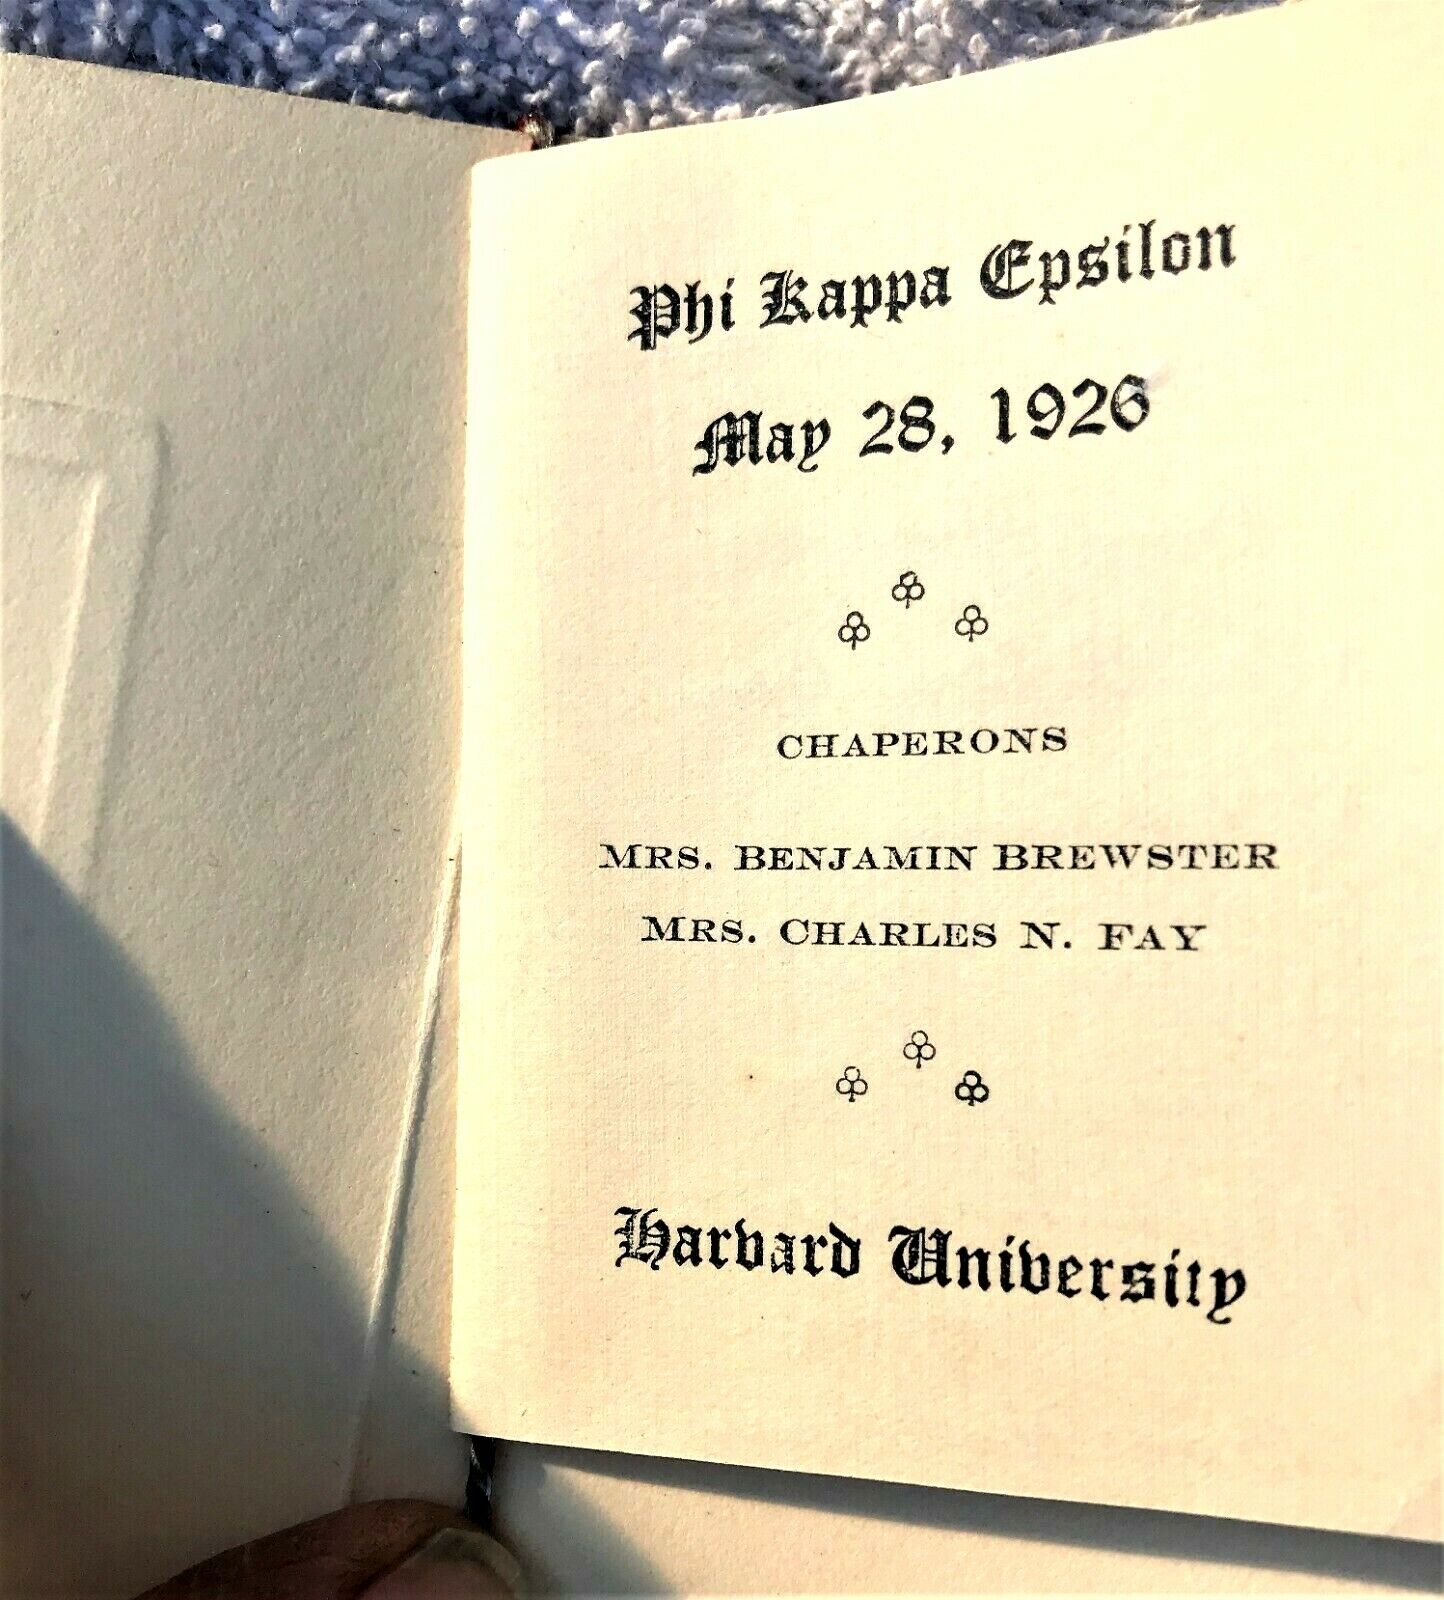 Harvard University Phi Beta Epsilon 1926 with Chaperons card